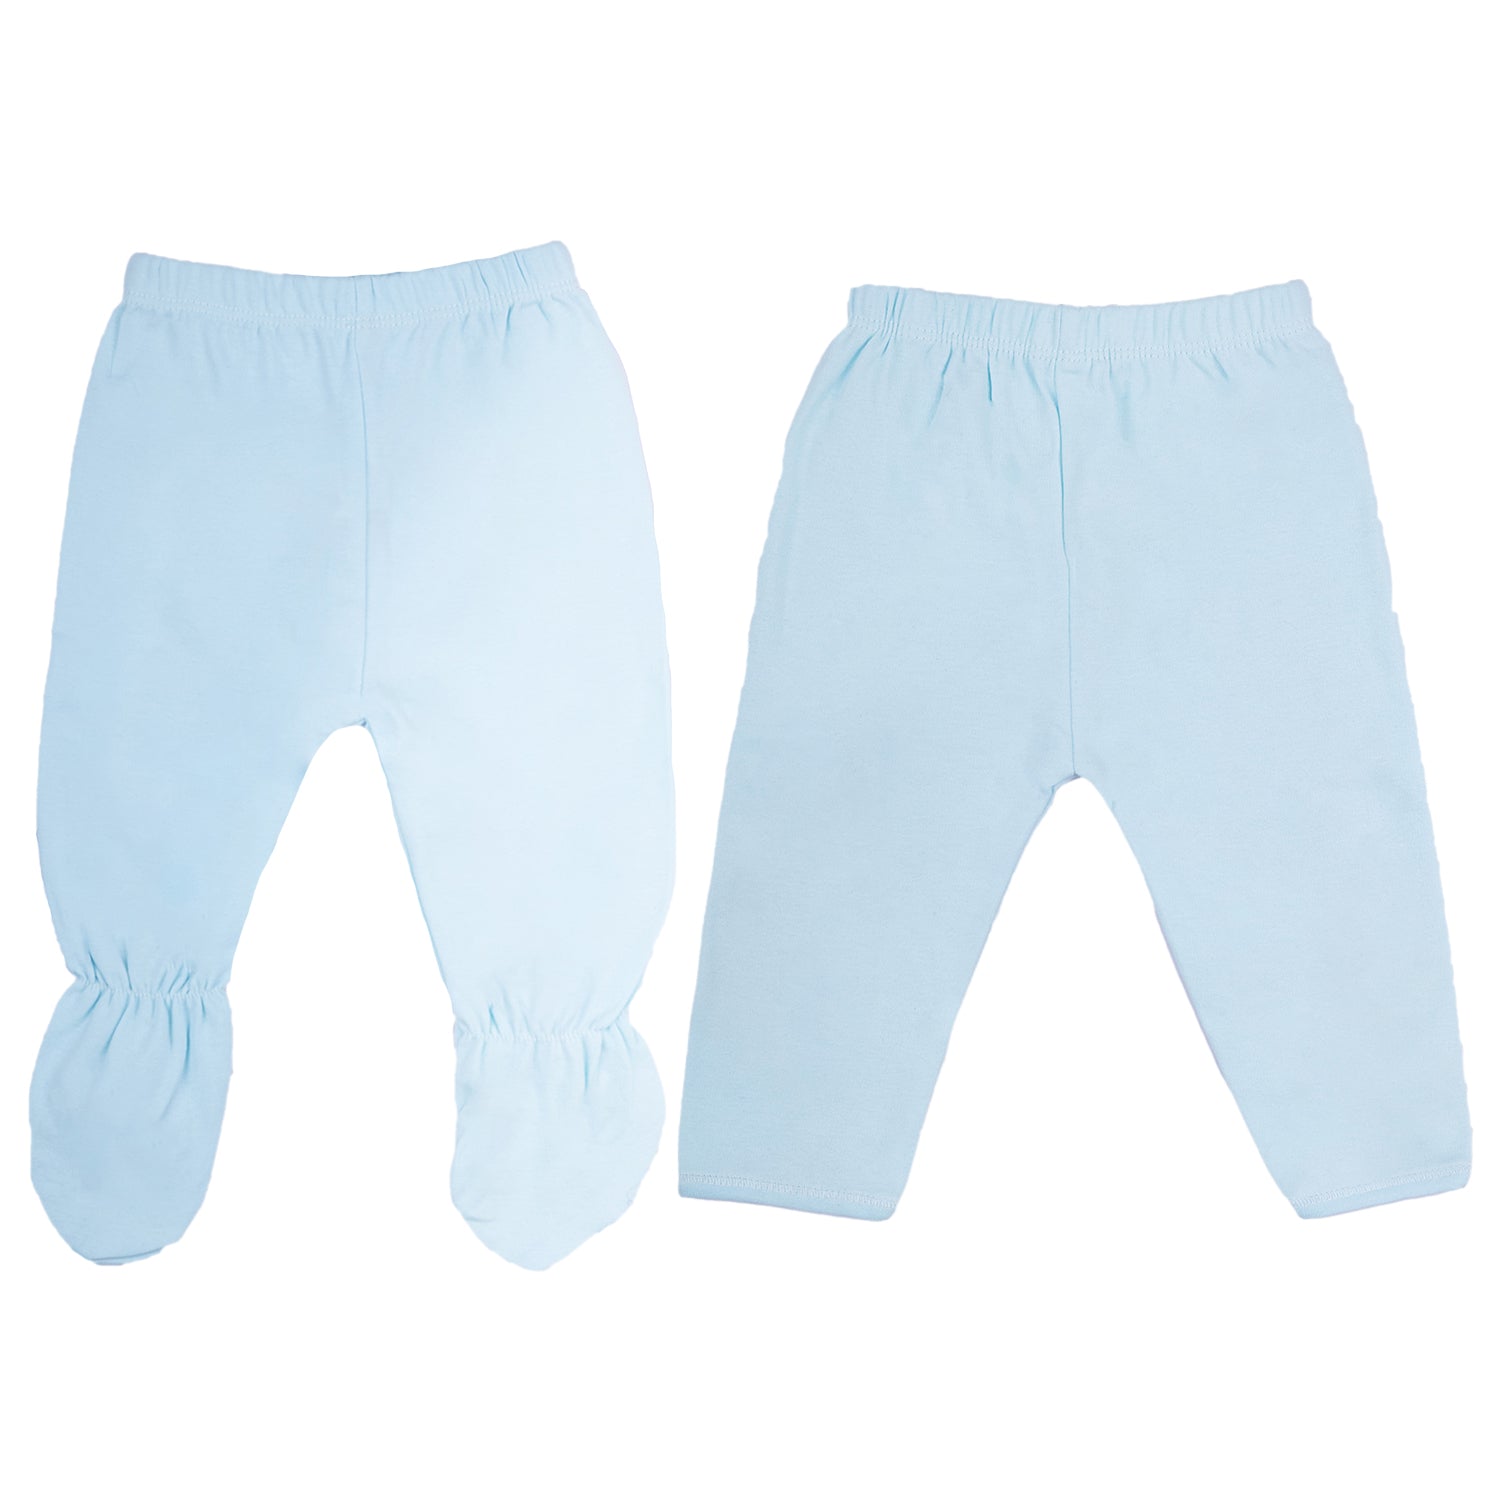 Baby Moo Cool Cat Print Cap Bib Pyjamas 5 Pcs Clothing Gift Set - Blue